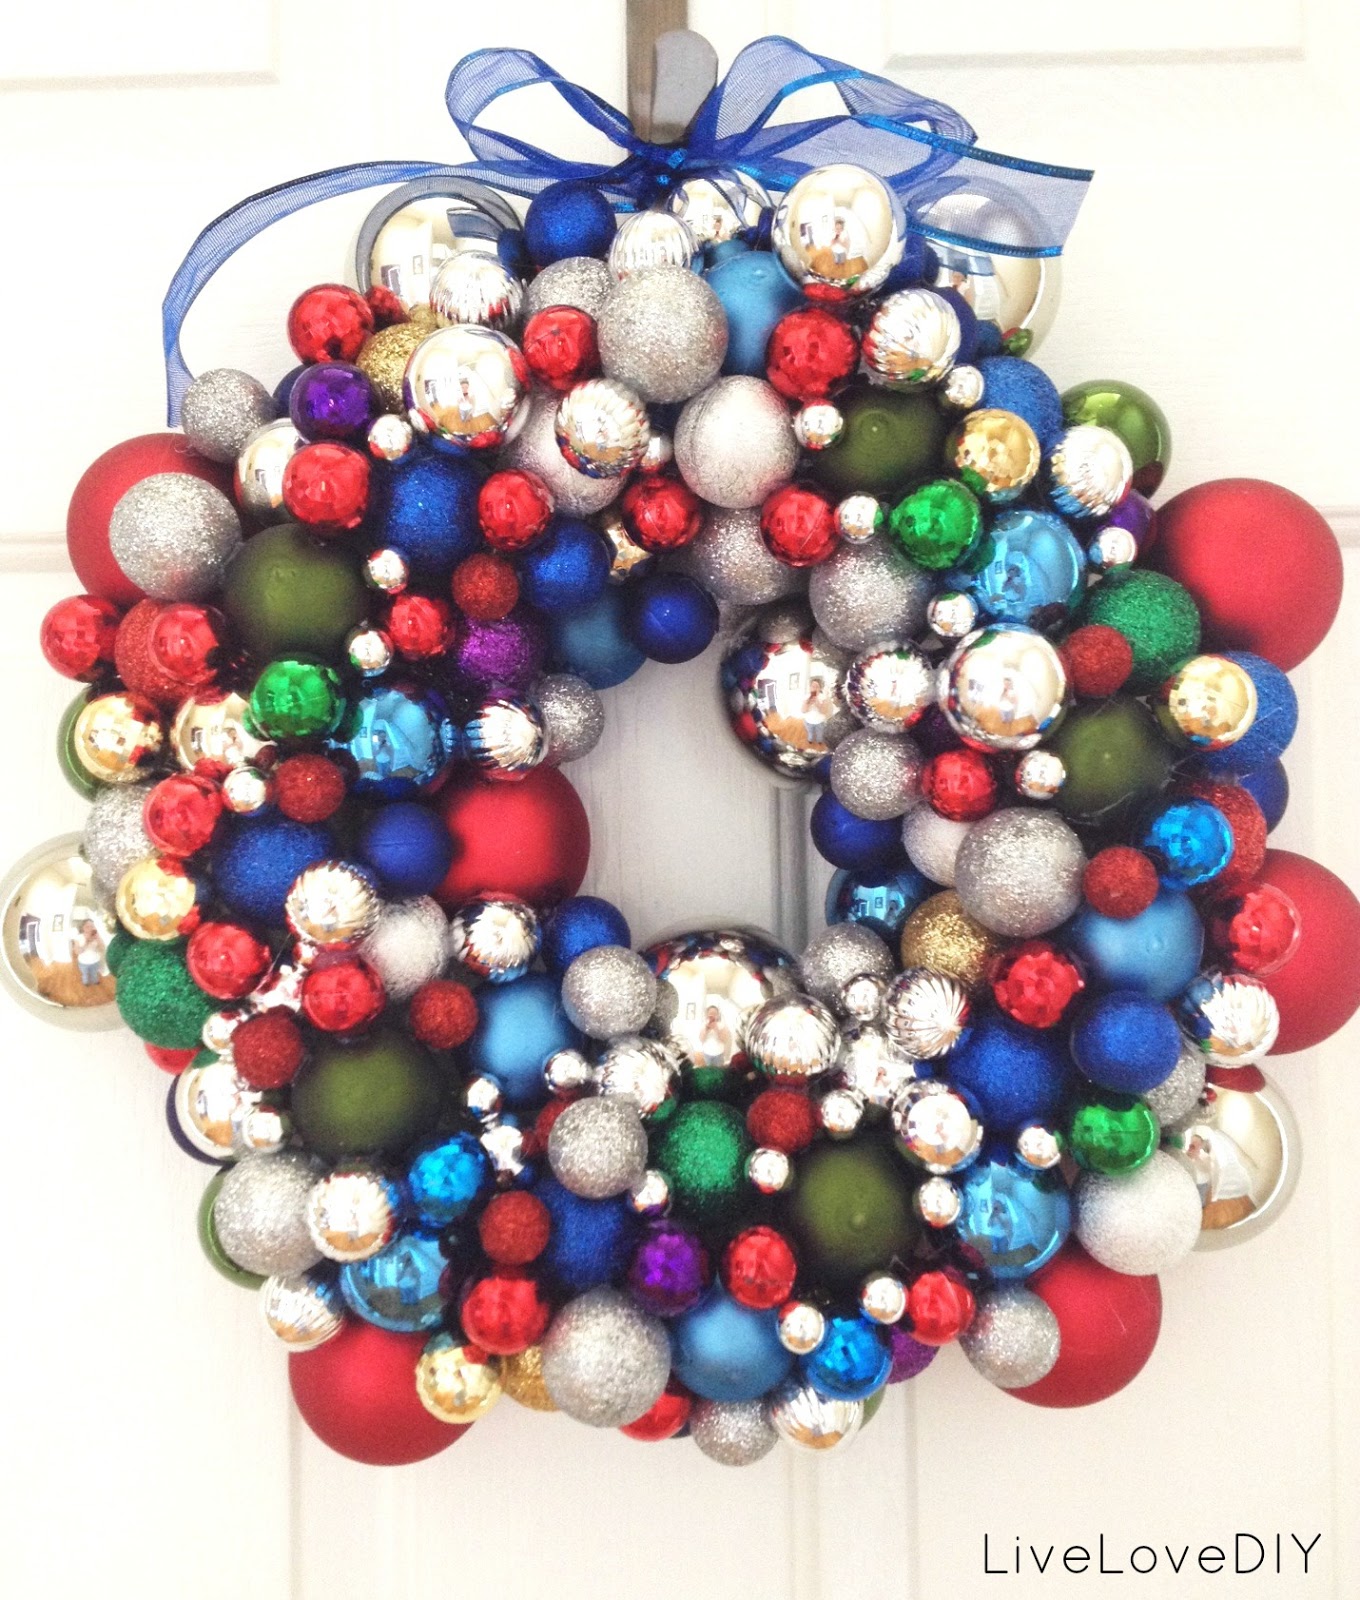 LiveLoveDIY: How To Make A Christmas Ornament Wreath